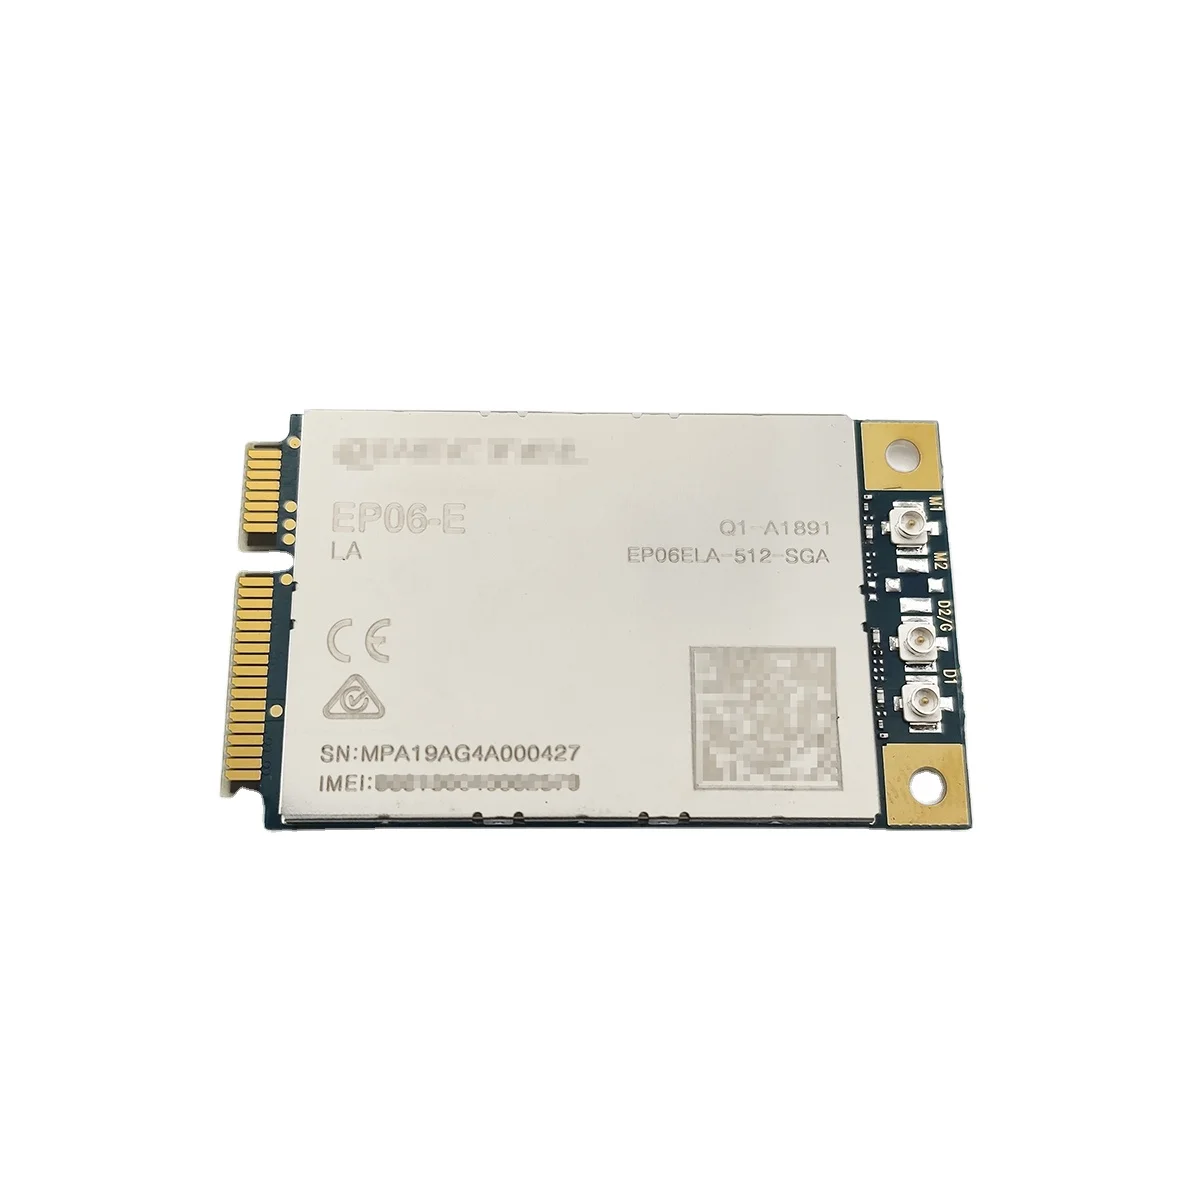 EP06-E EP06ELA-512-SGA antennas mini pcie to usb adapter IoT/M2M-optimized LTE-A Cat 6 Mini PCIe Module LTE support Openwrt